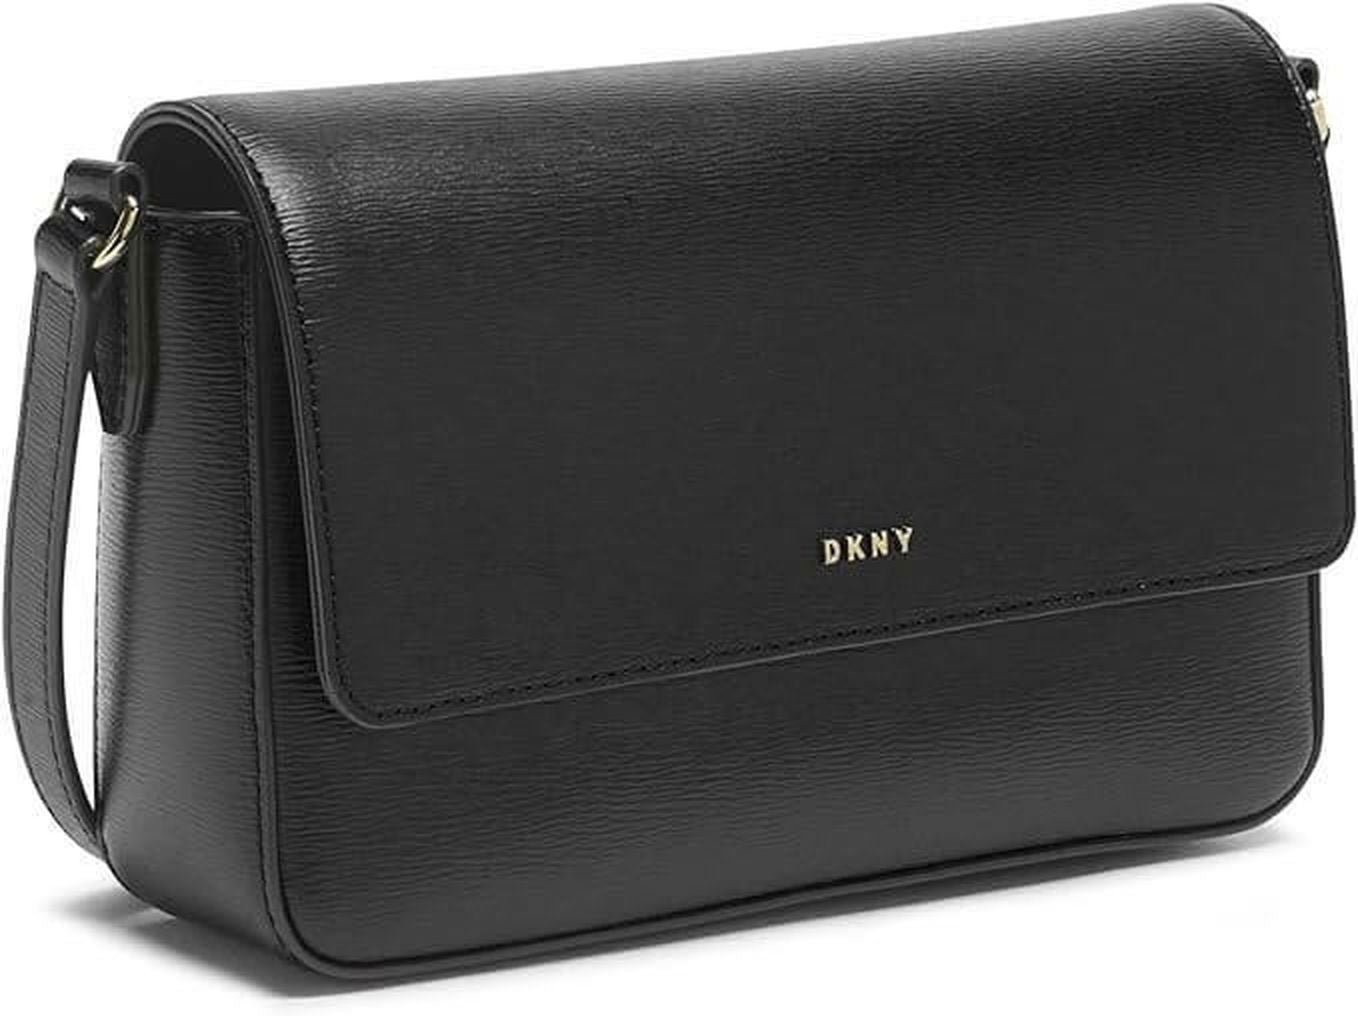 DKNY Bryant Medium Flap Crossbody bag, Sutton Leather